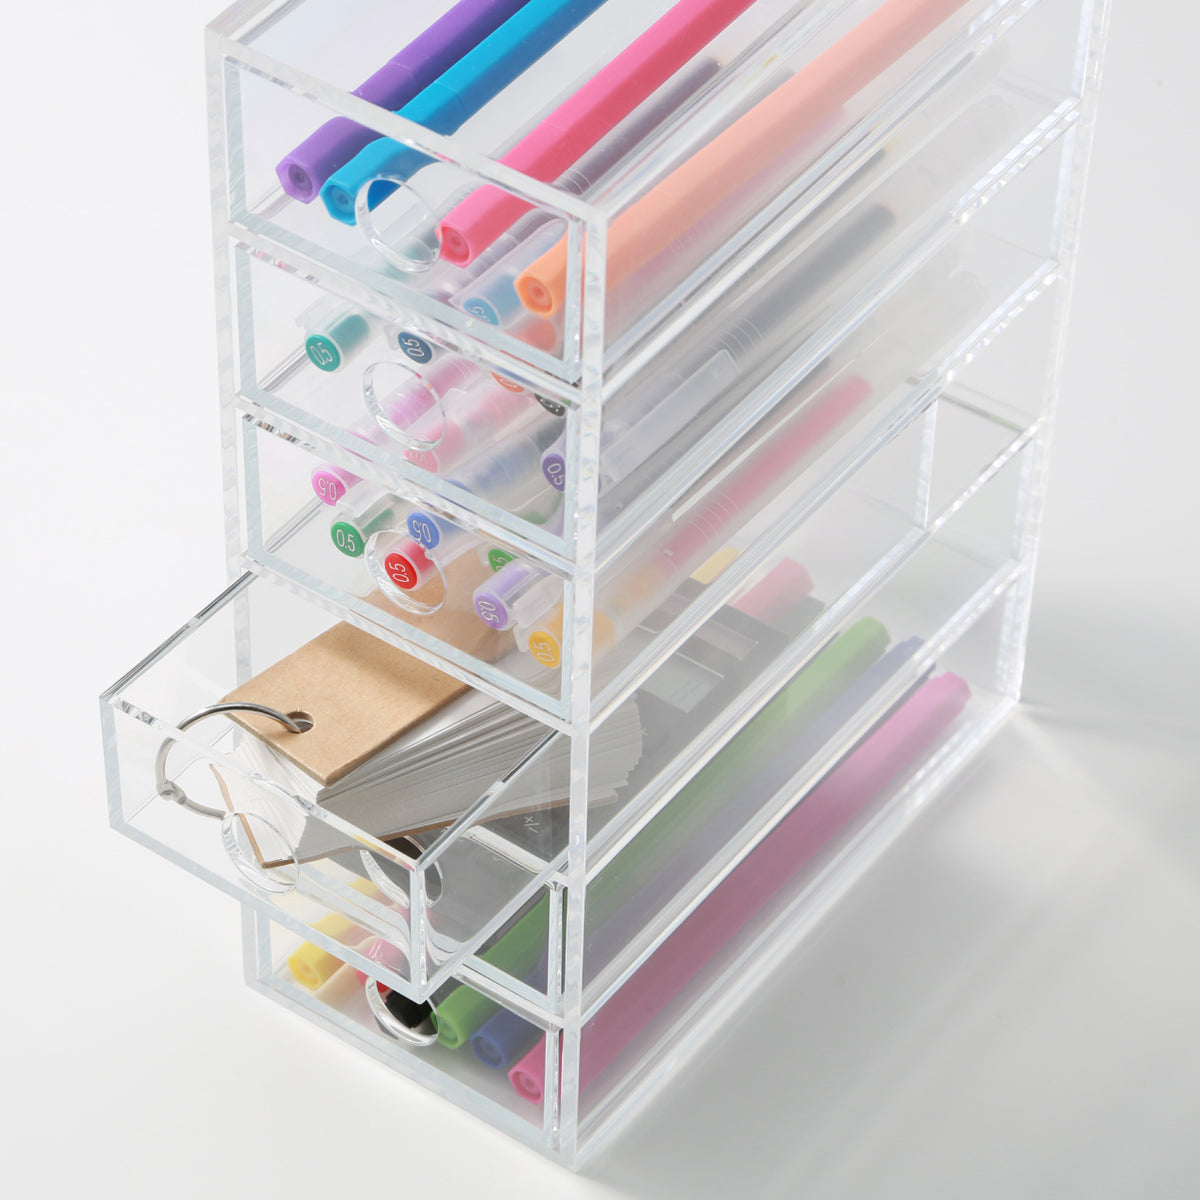 Acrylic Storages, Desk Organization